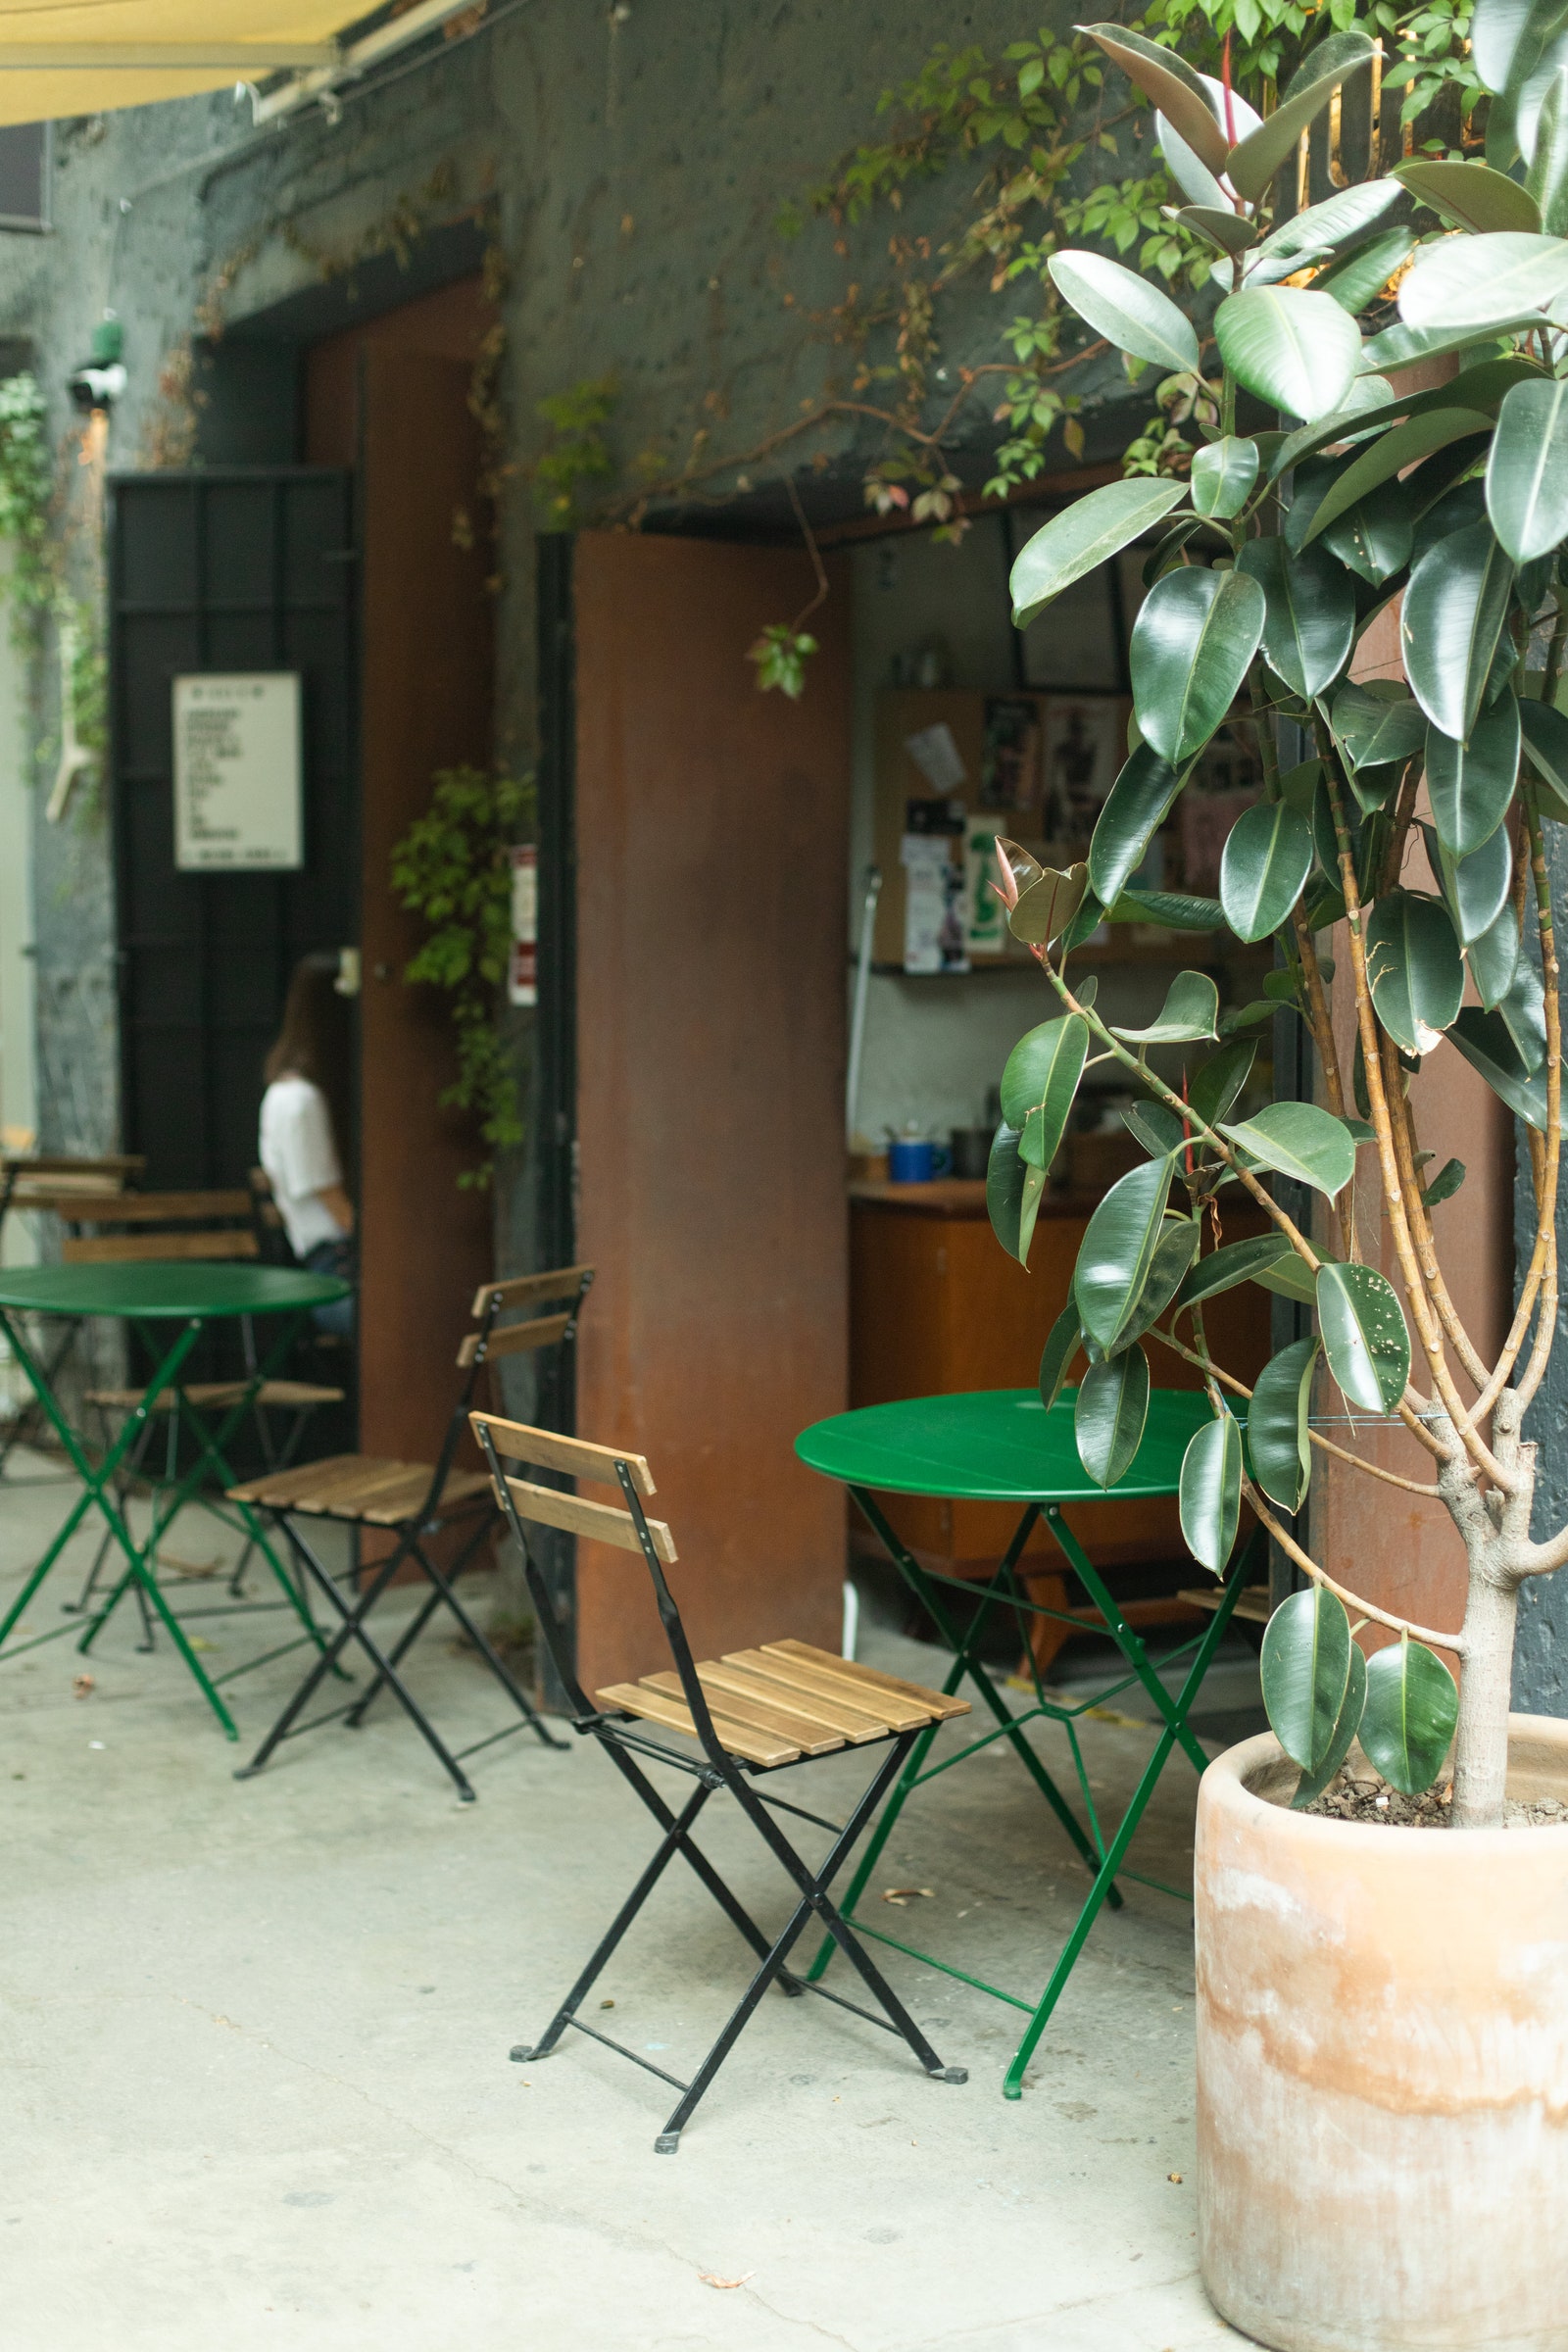 The outdoor dining area at Canopia. Photo: Daniela Villarreal